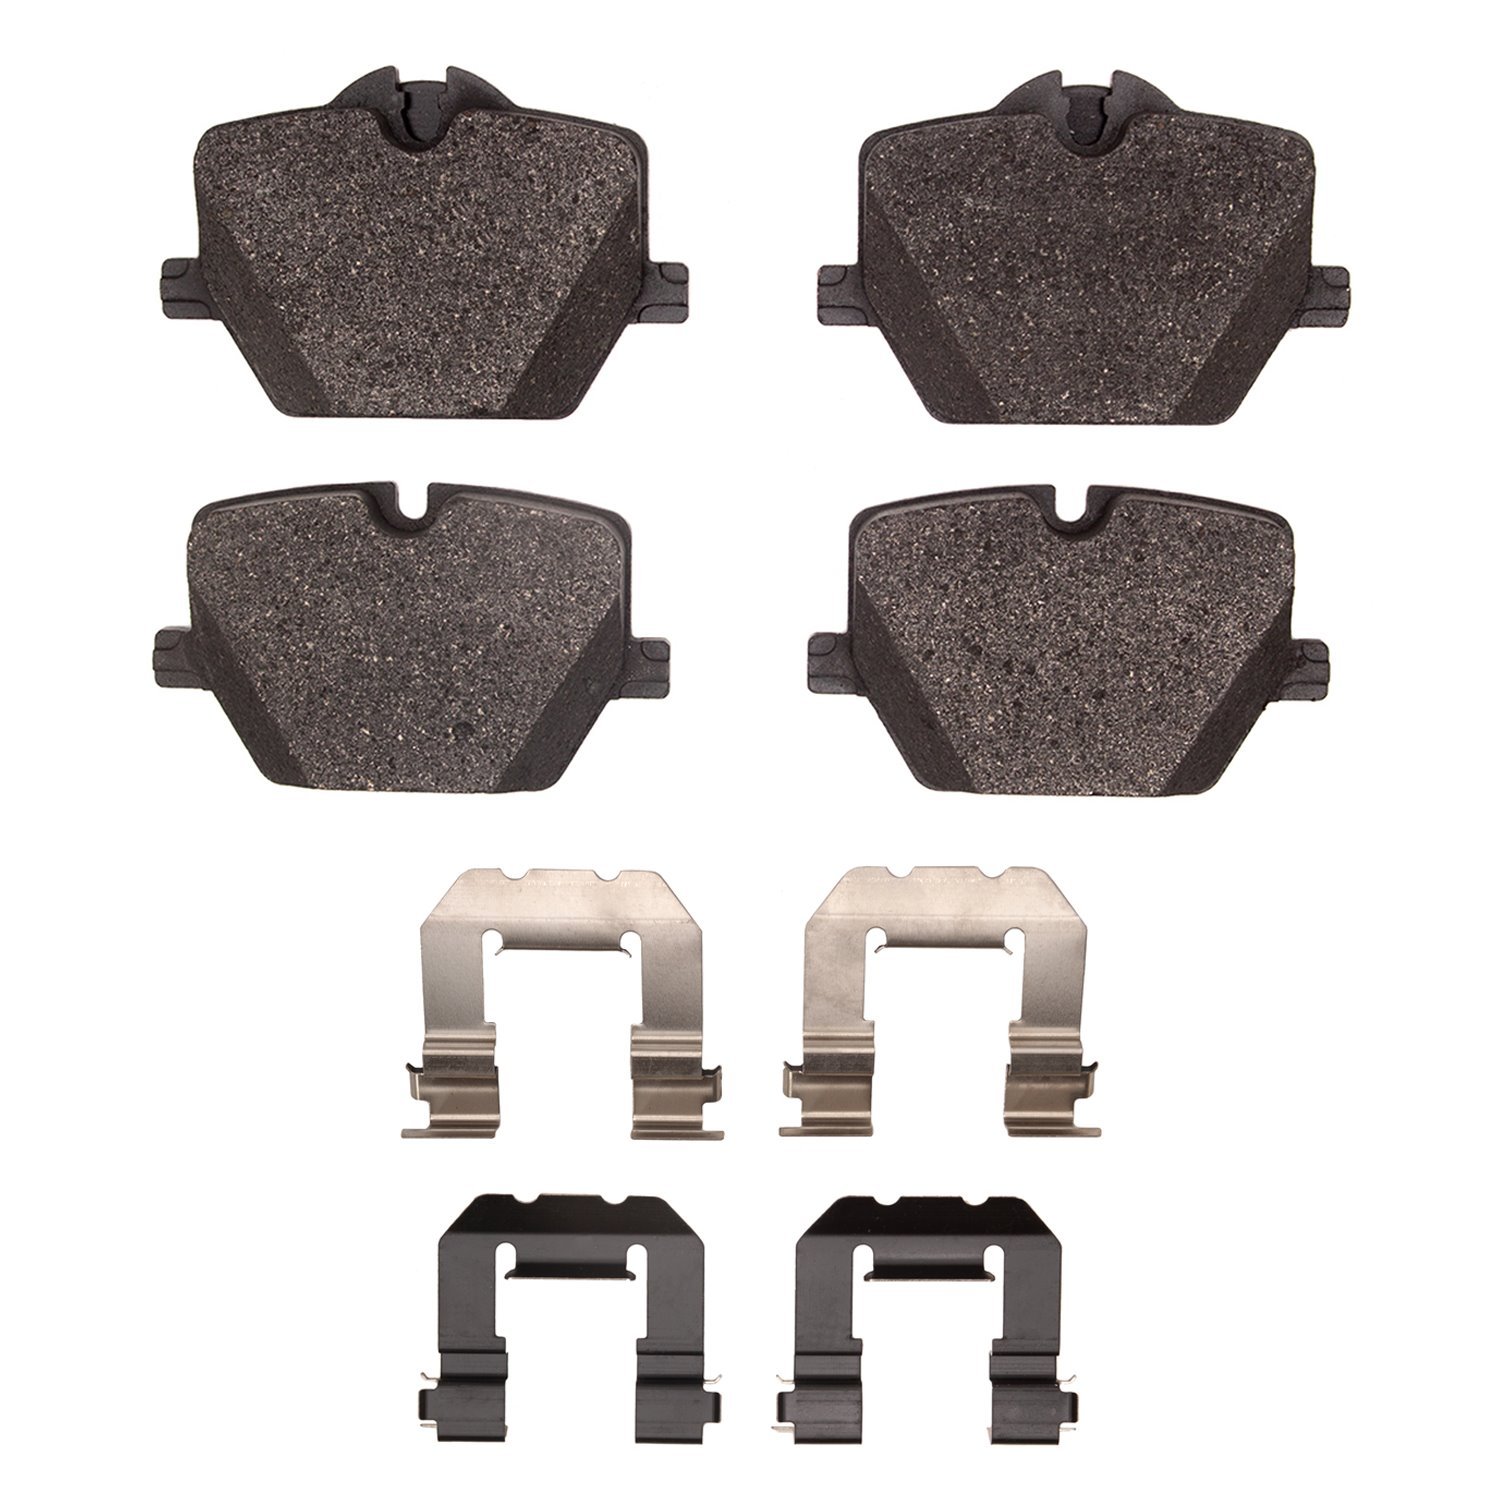 1551-2220-01 5000 Advanced Low-Metallic Brake Pads & Hardware Kit, Fits Select Multiple Makes/Models, Position: Rear